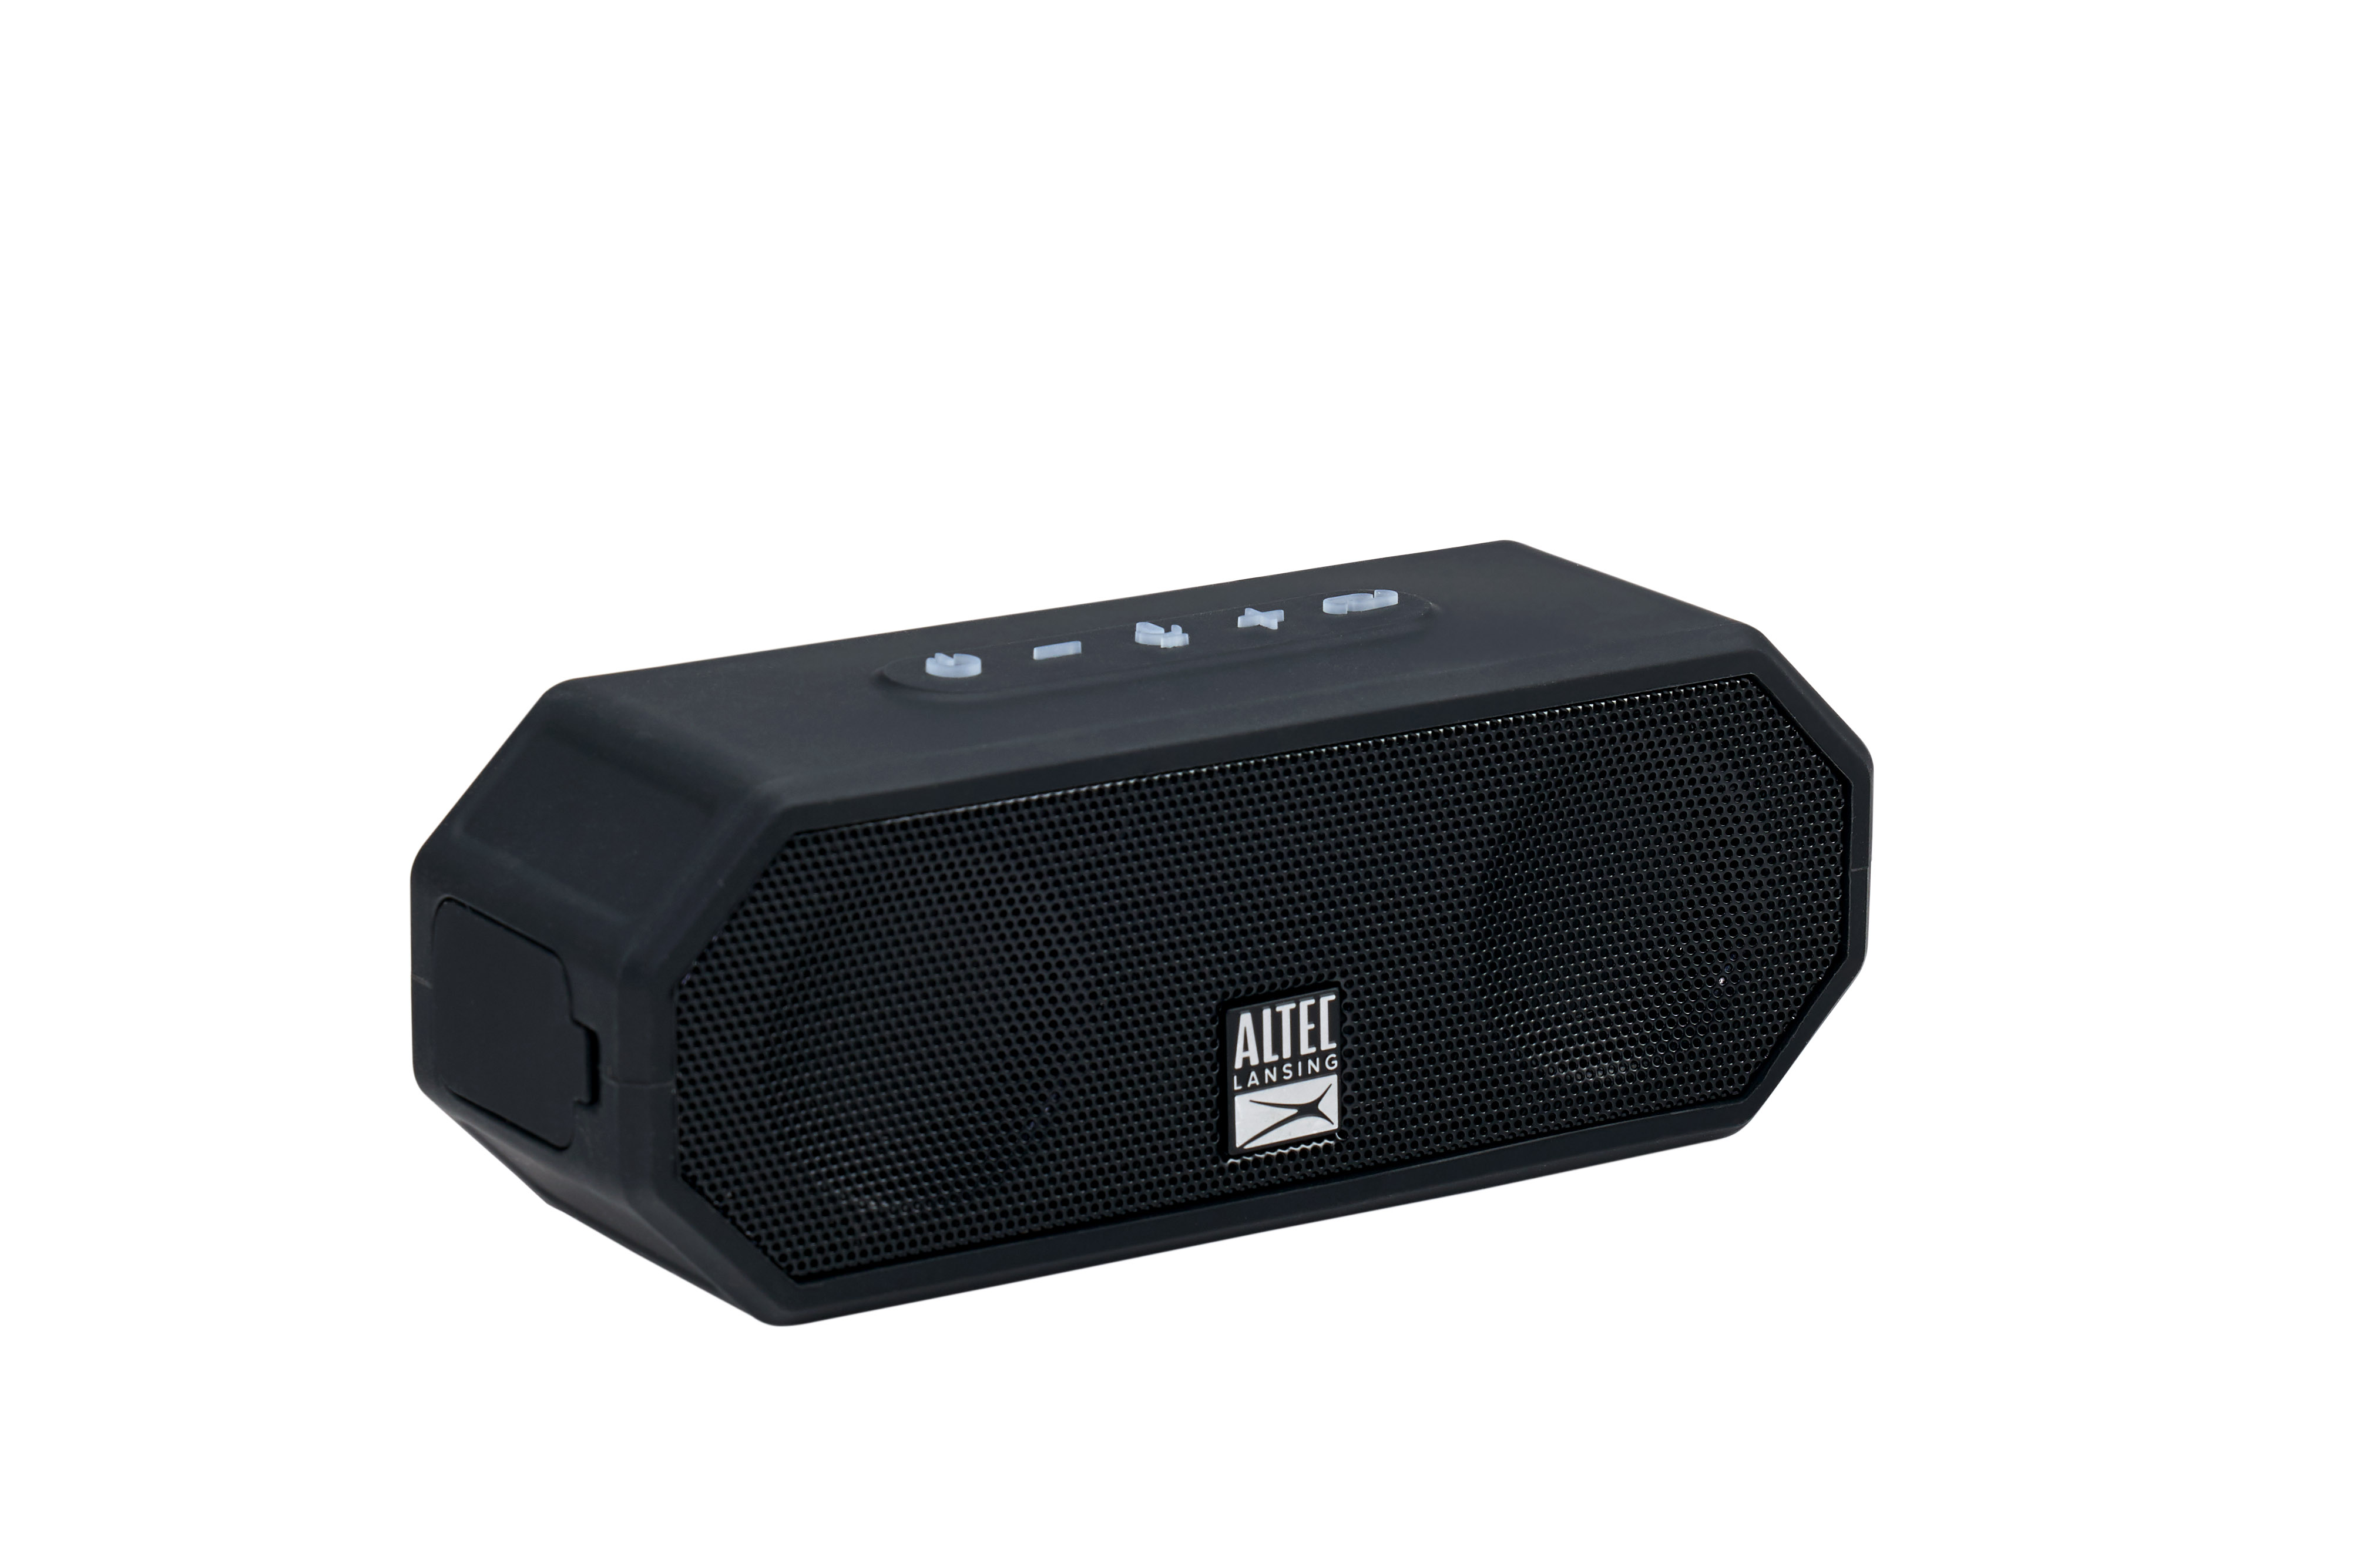 Altec Lansing Jacket H20 4 Portable Bluetooth Speaker - Black - image 10 of 14